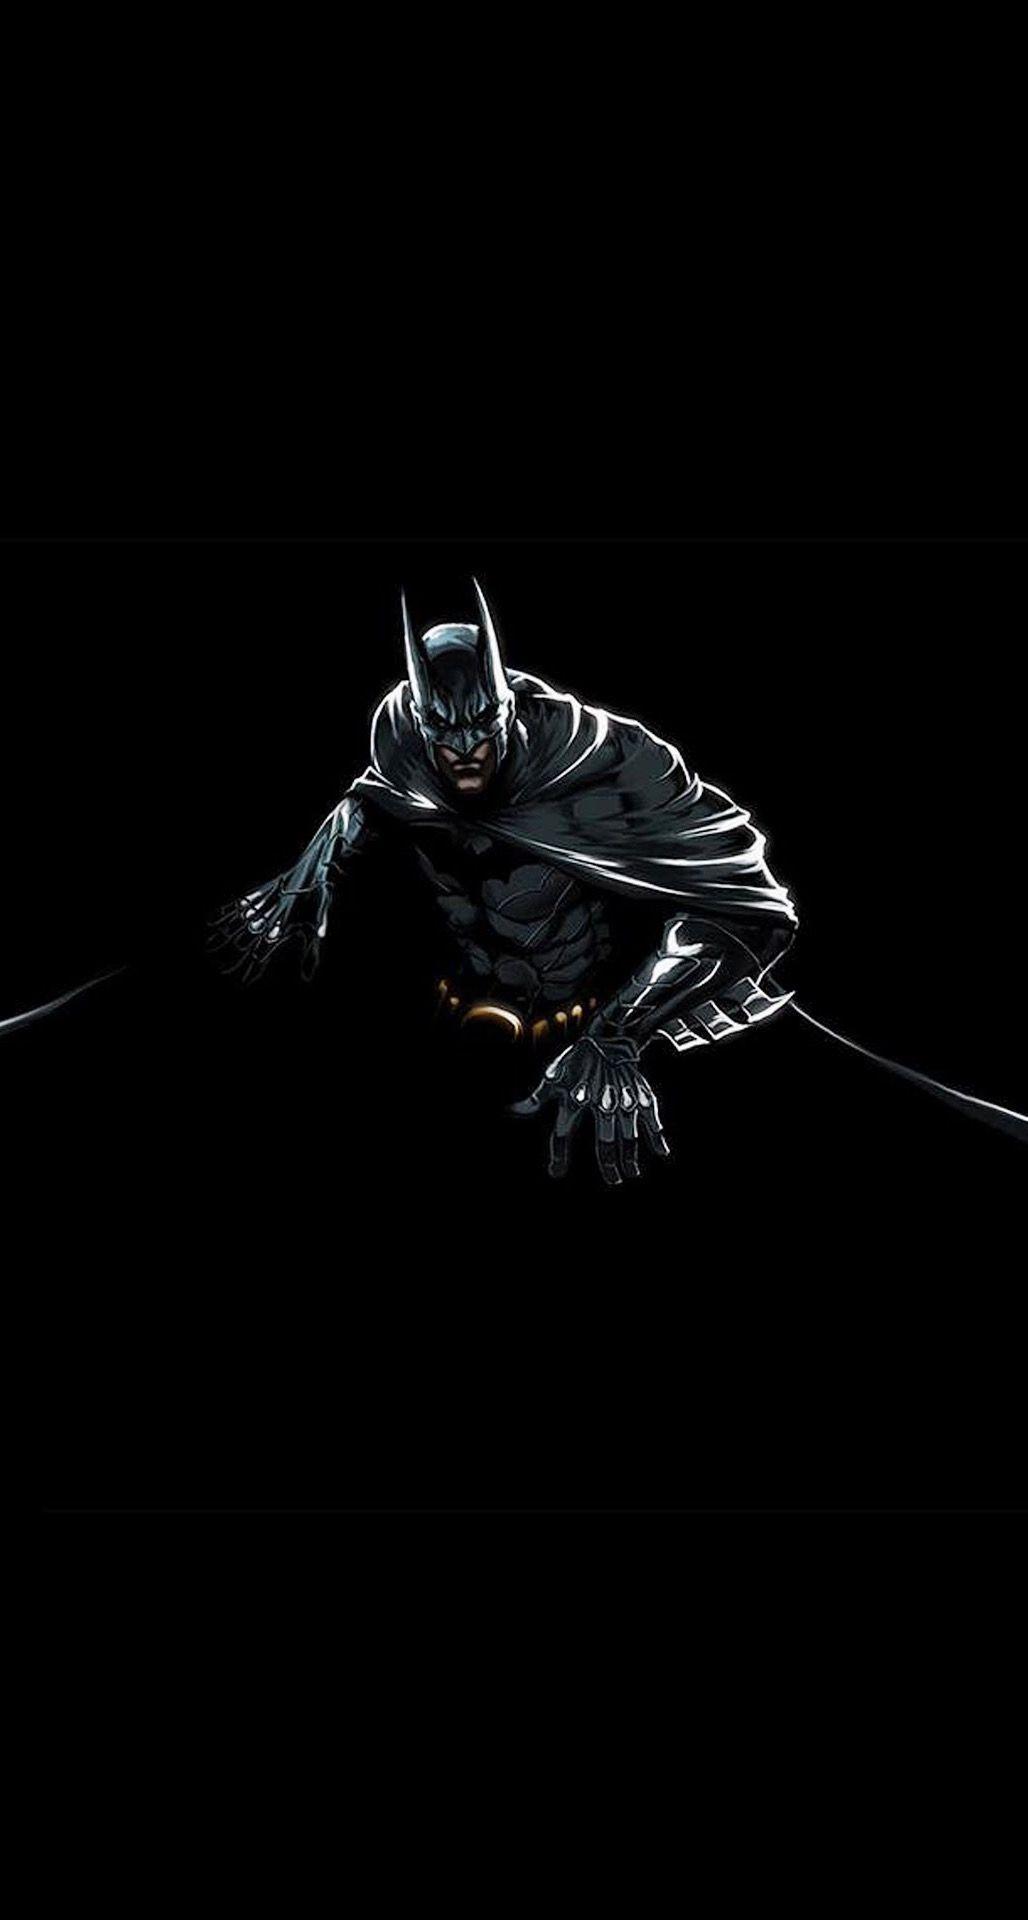 Batman HD photo with black iphone background free